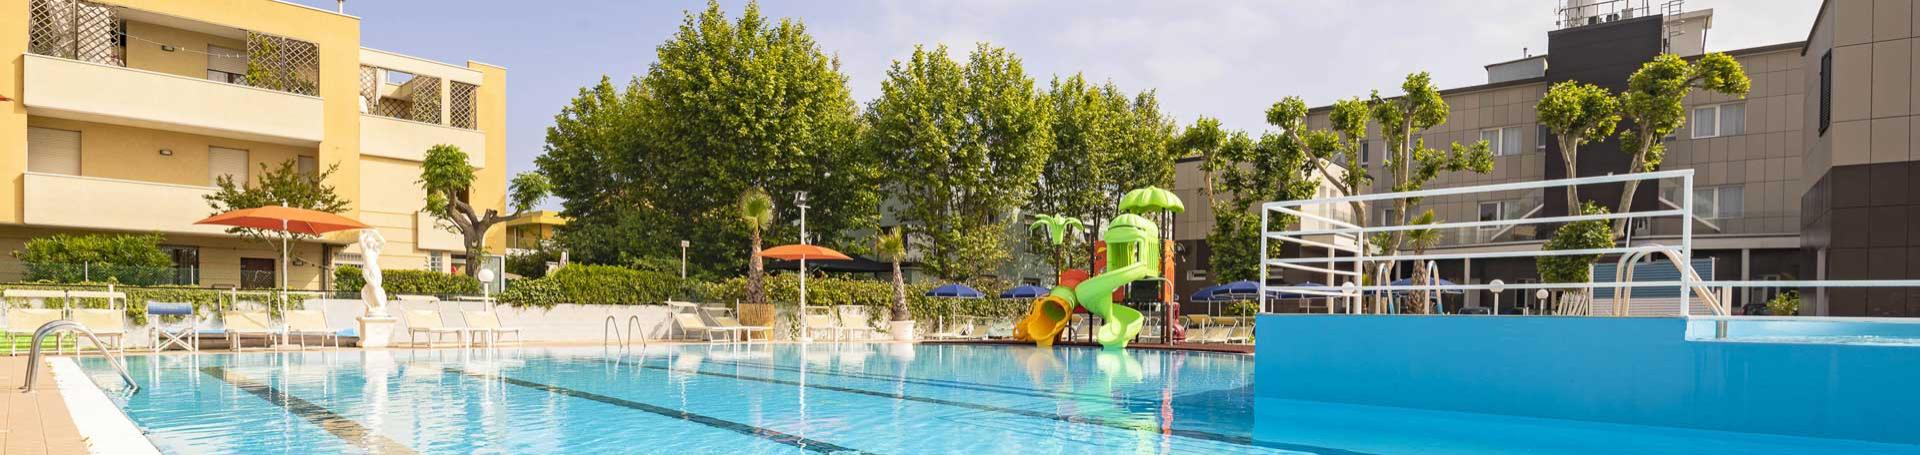 colorperlavillage en hotel-igea-marina-with-swimming-pool 009